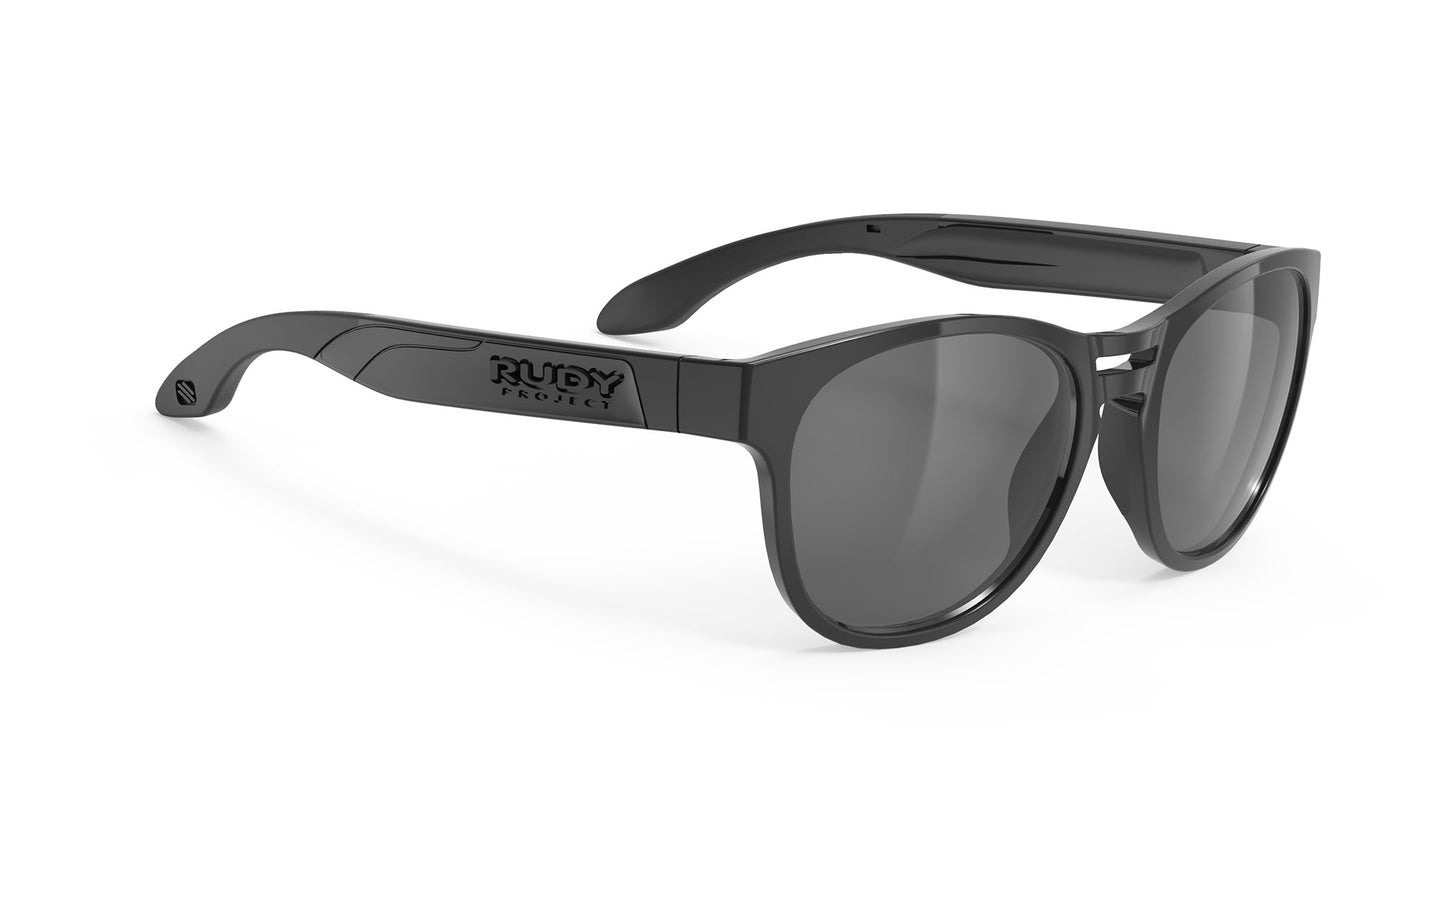 Rudy Project Spinair 56 Black Gloss - Rp Optics Smoke Black Sunglasses